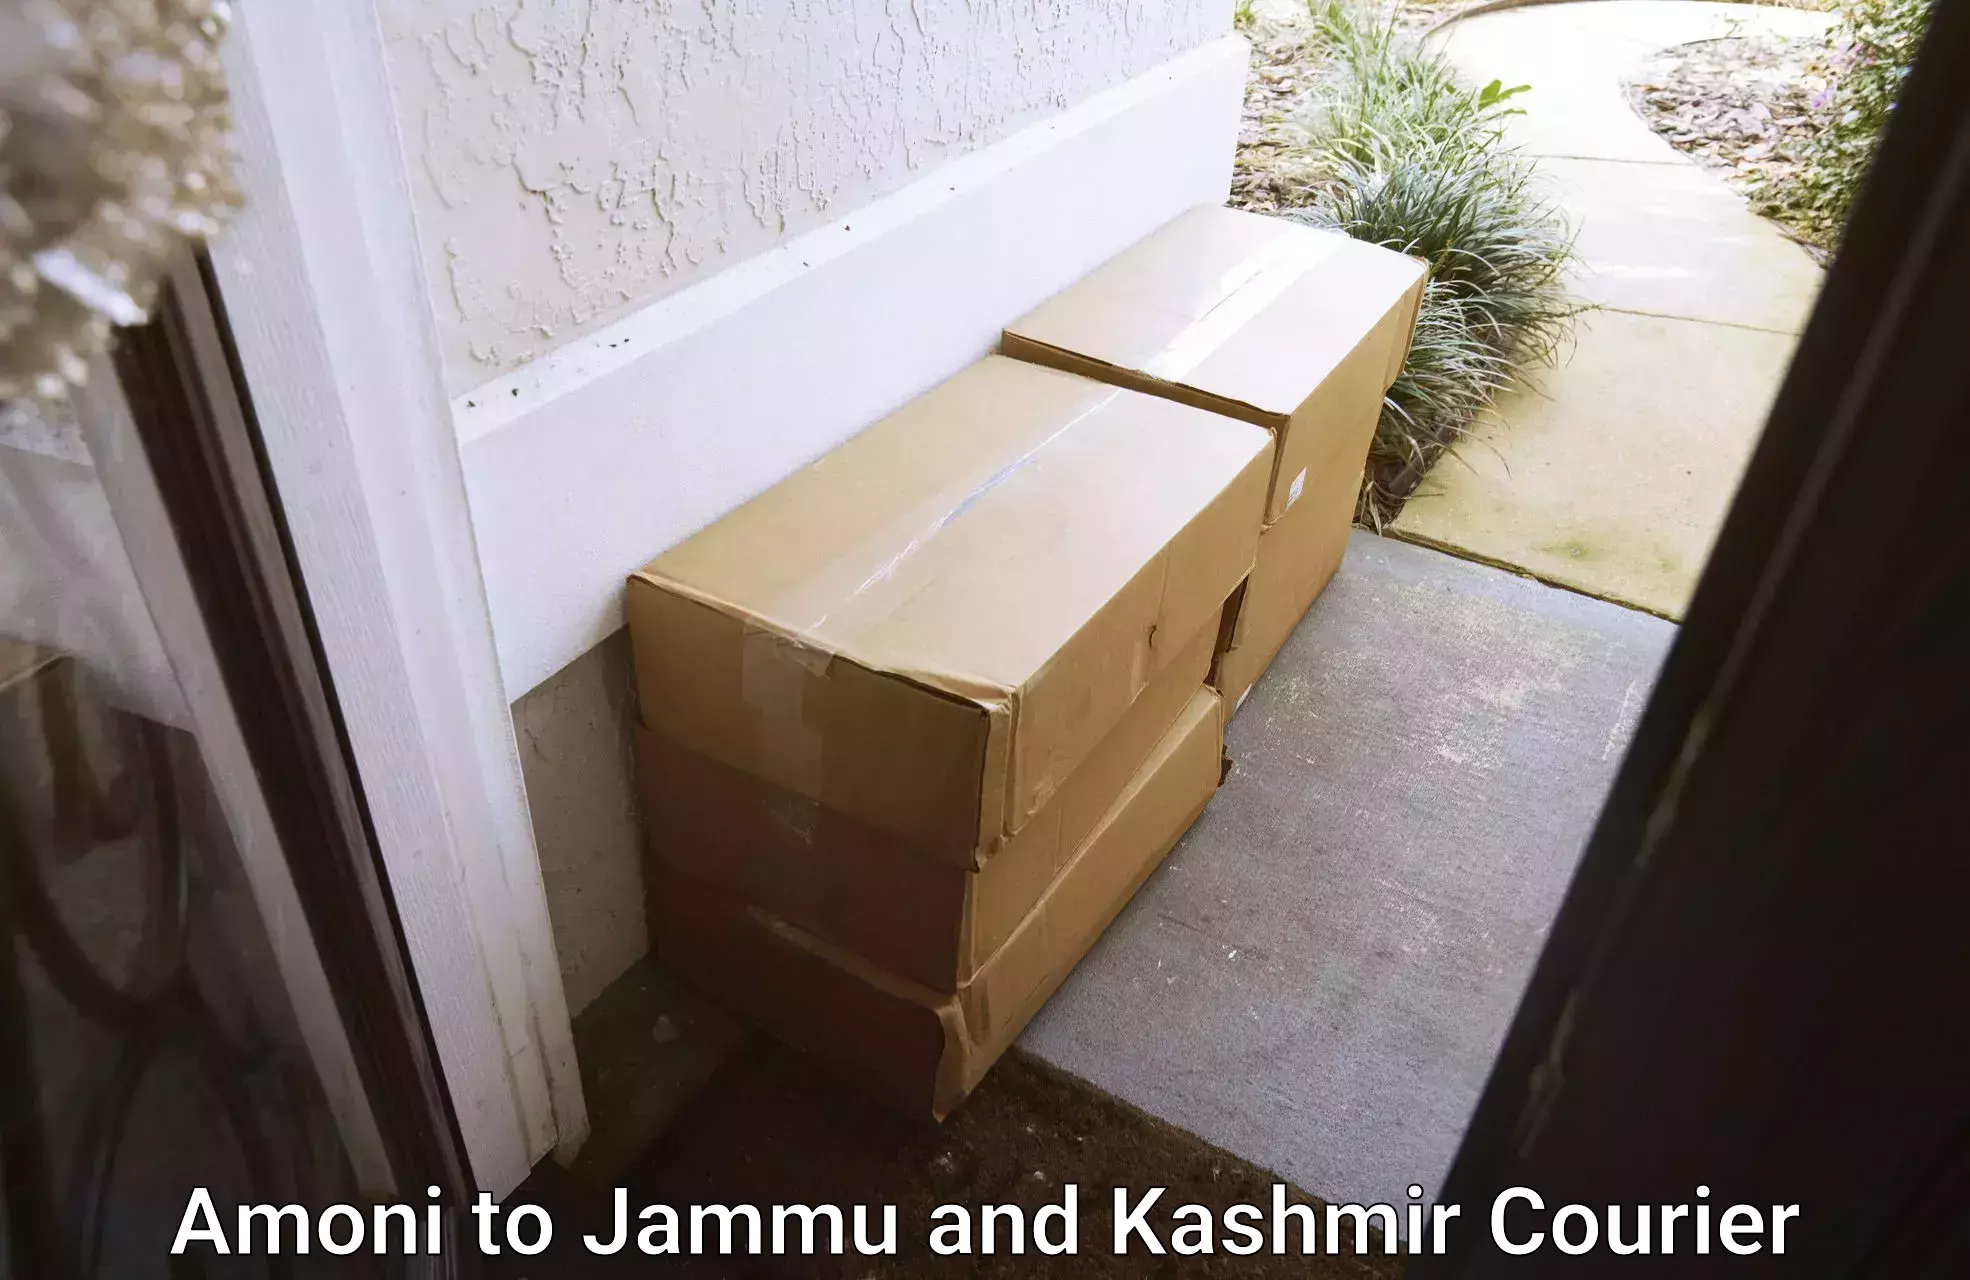 Courier service comparison Amoni to Jammu and Kashmir